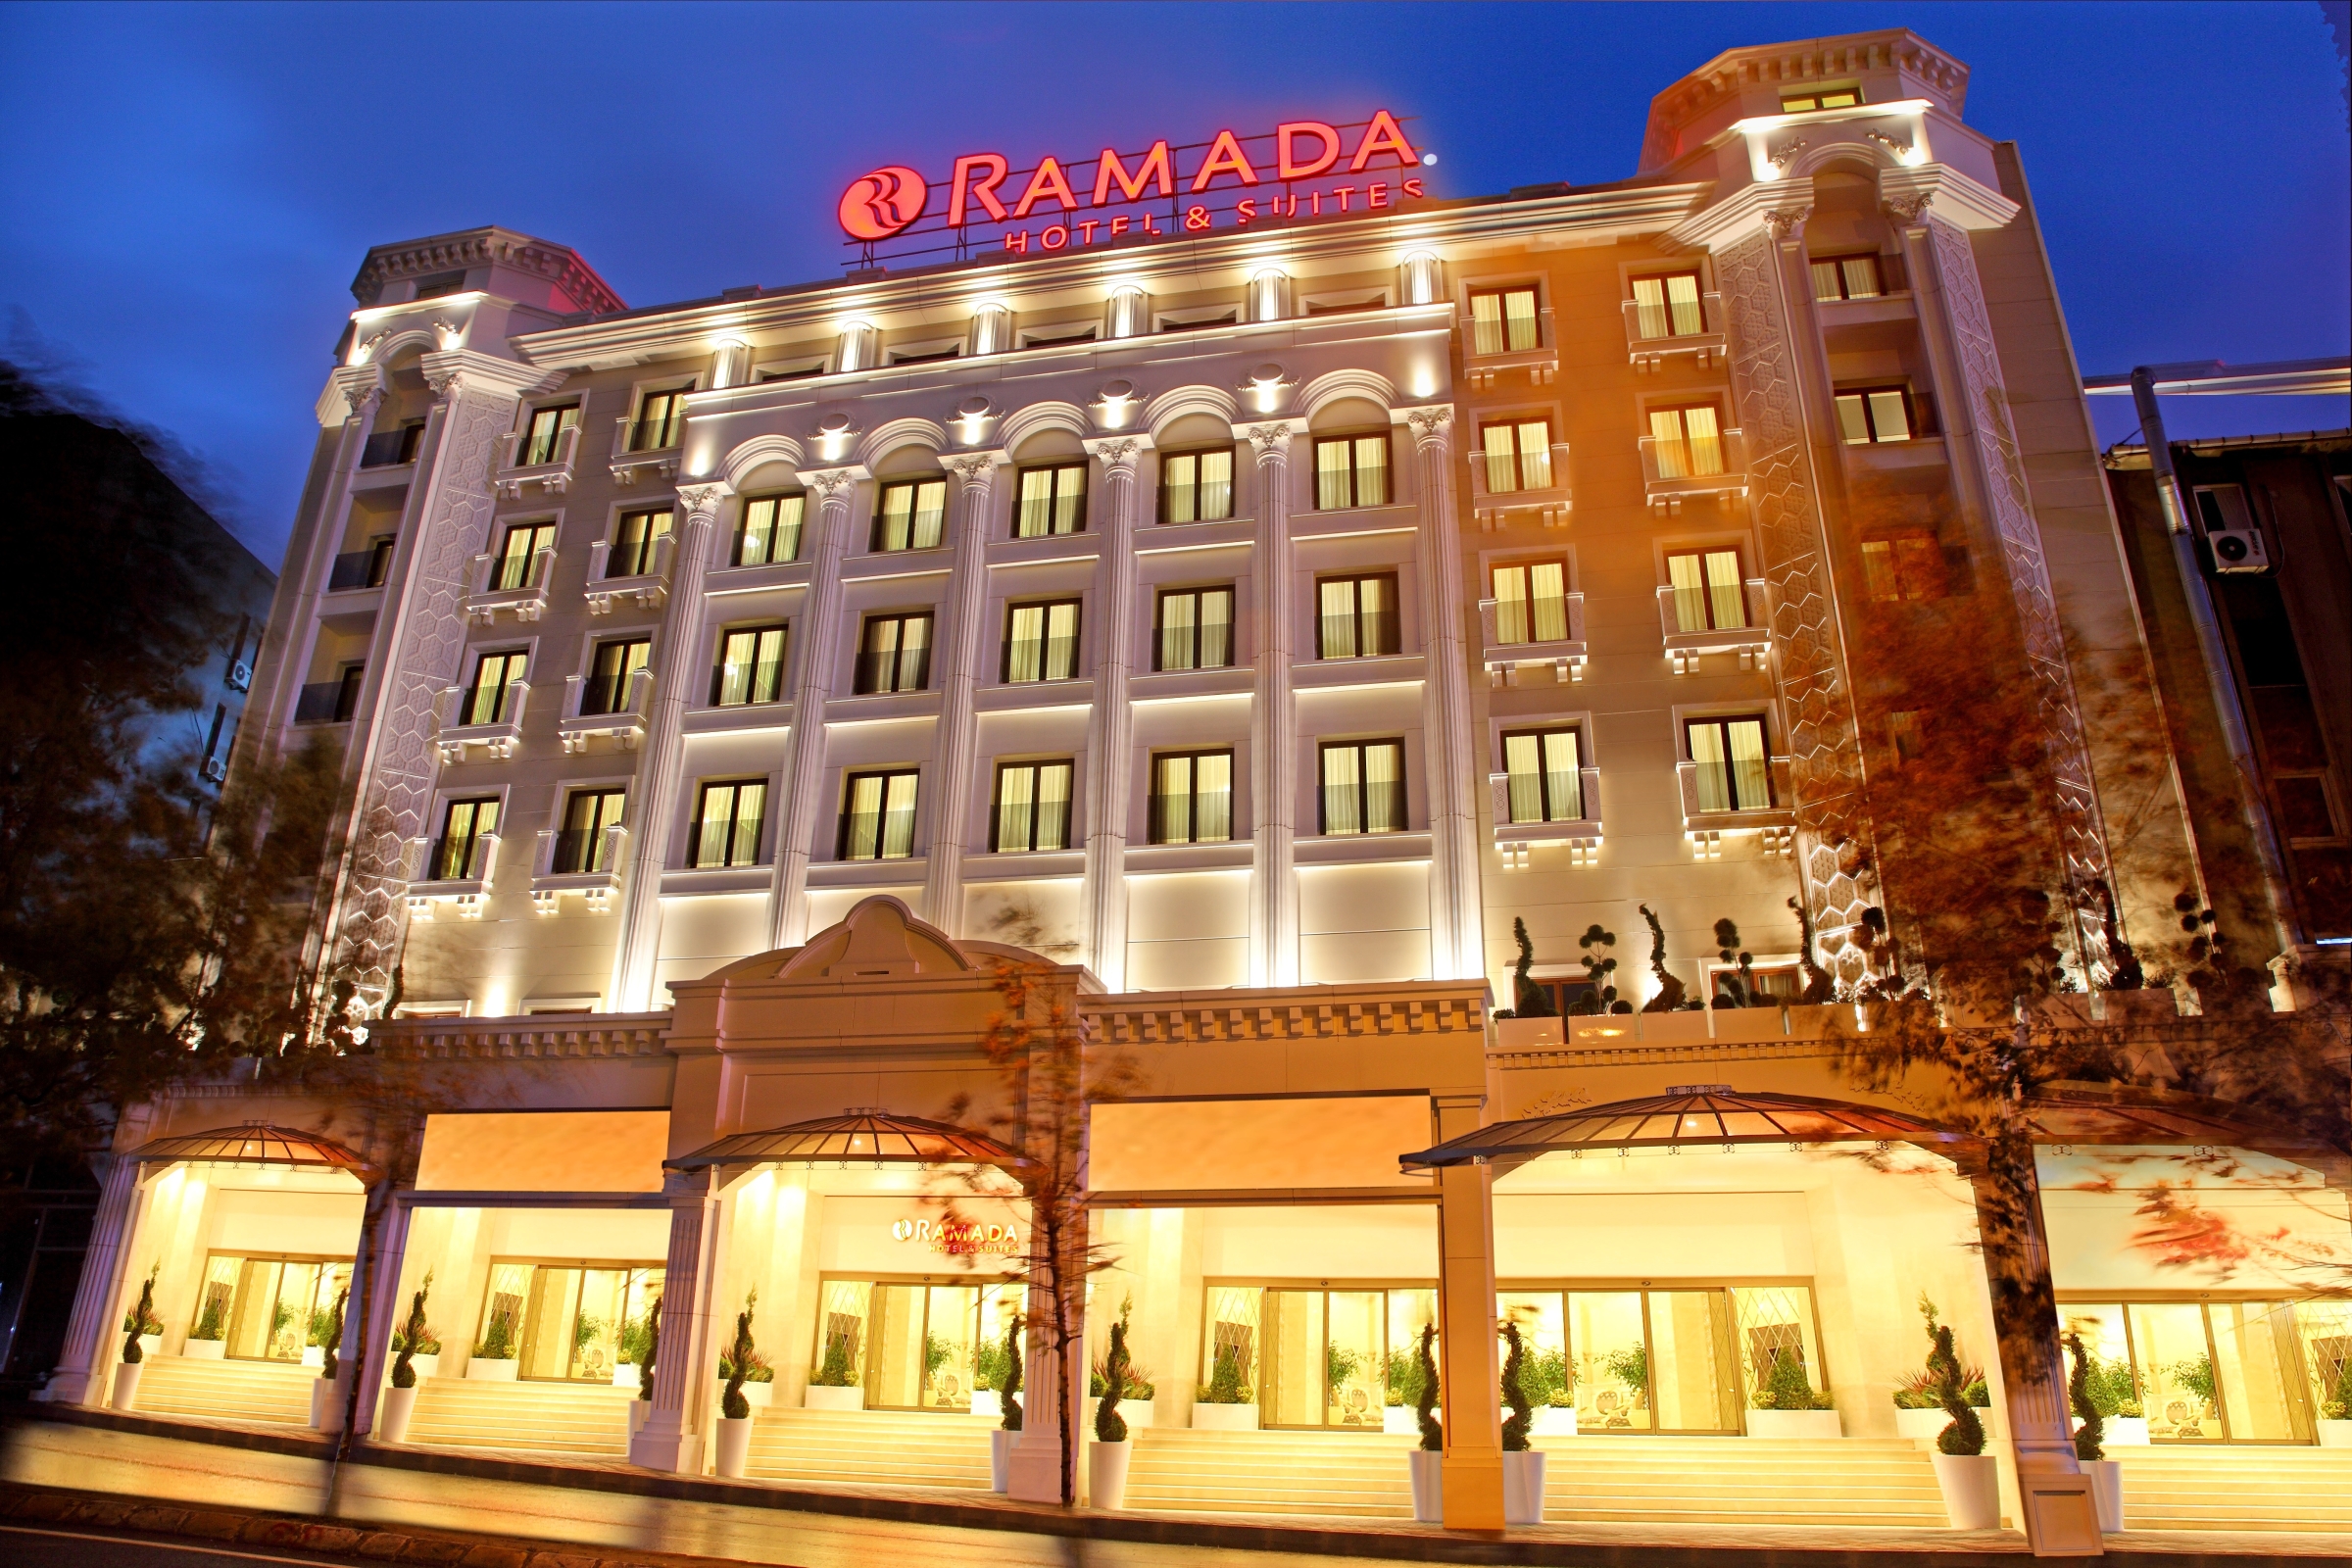 Ramada Hotel & Suites Istanbul Merter en HRS con servicios gratuitos